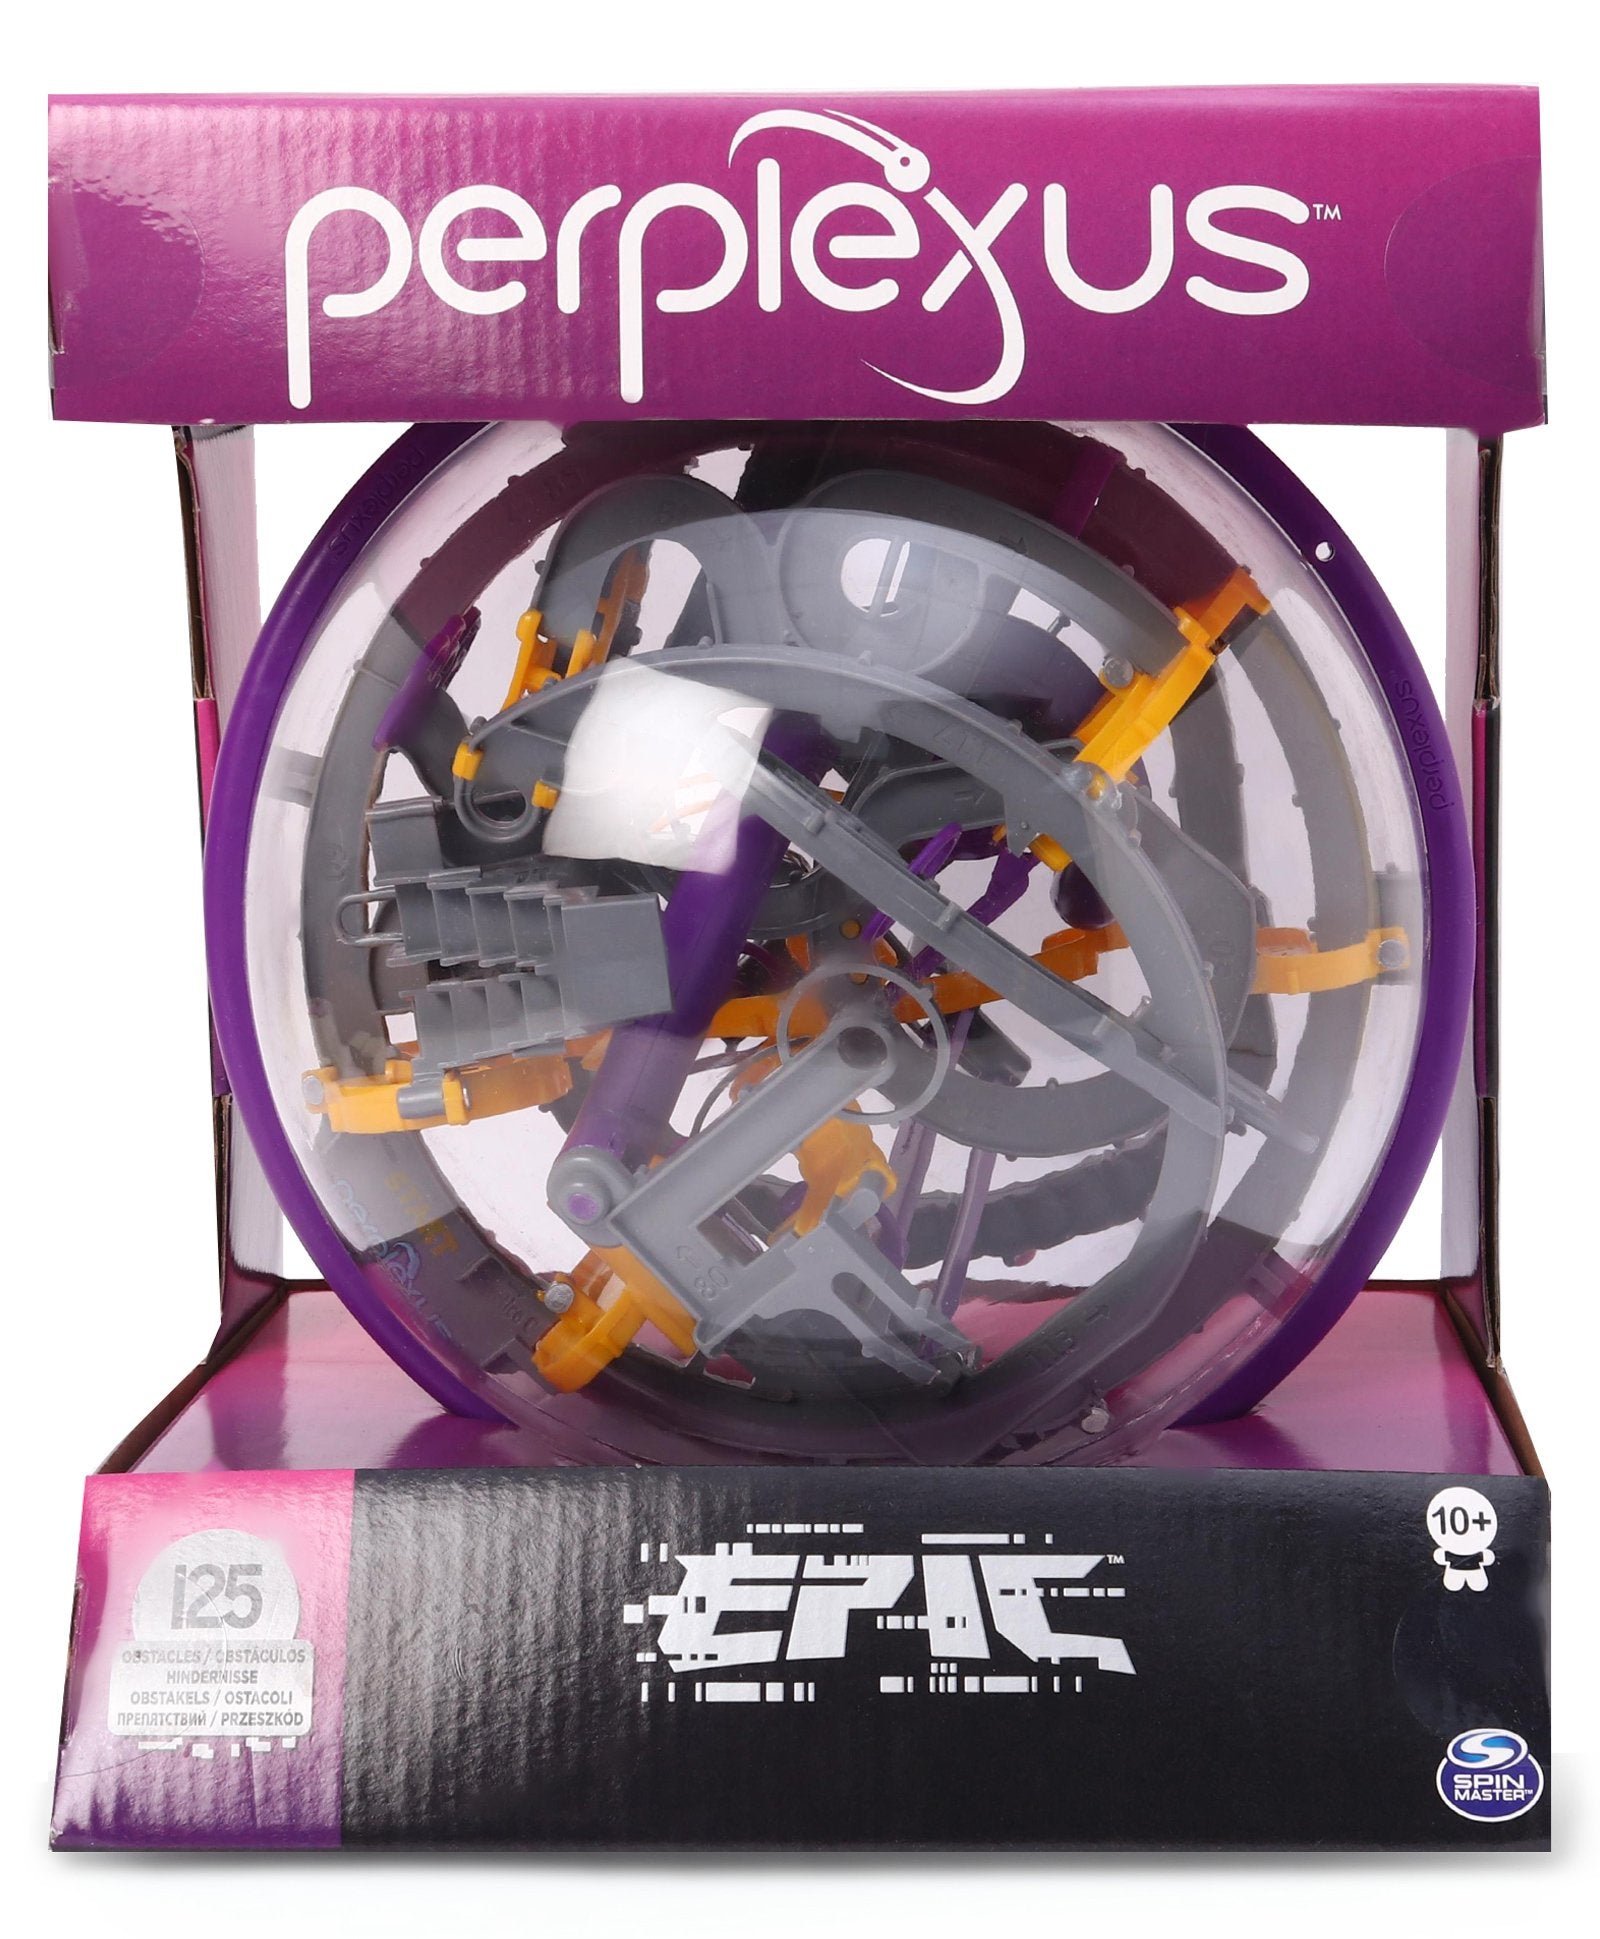 Perplexus Epic - Spin Master